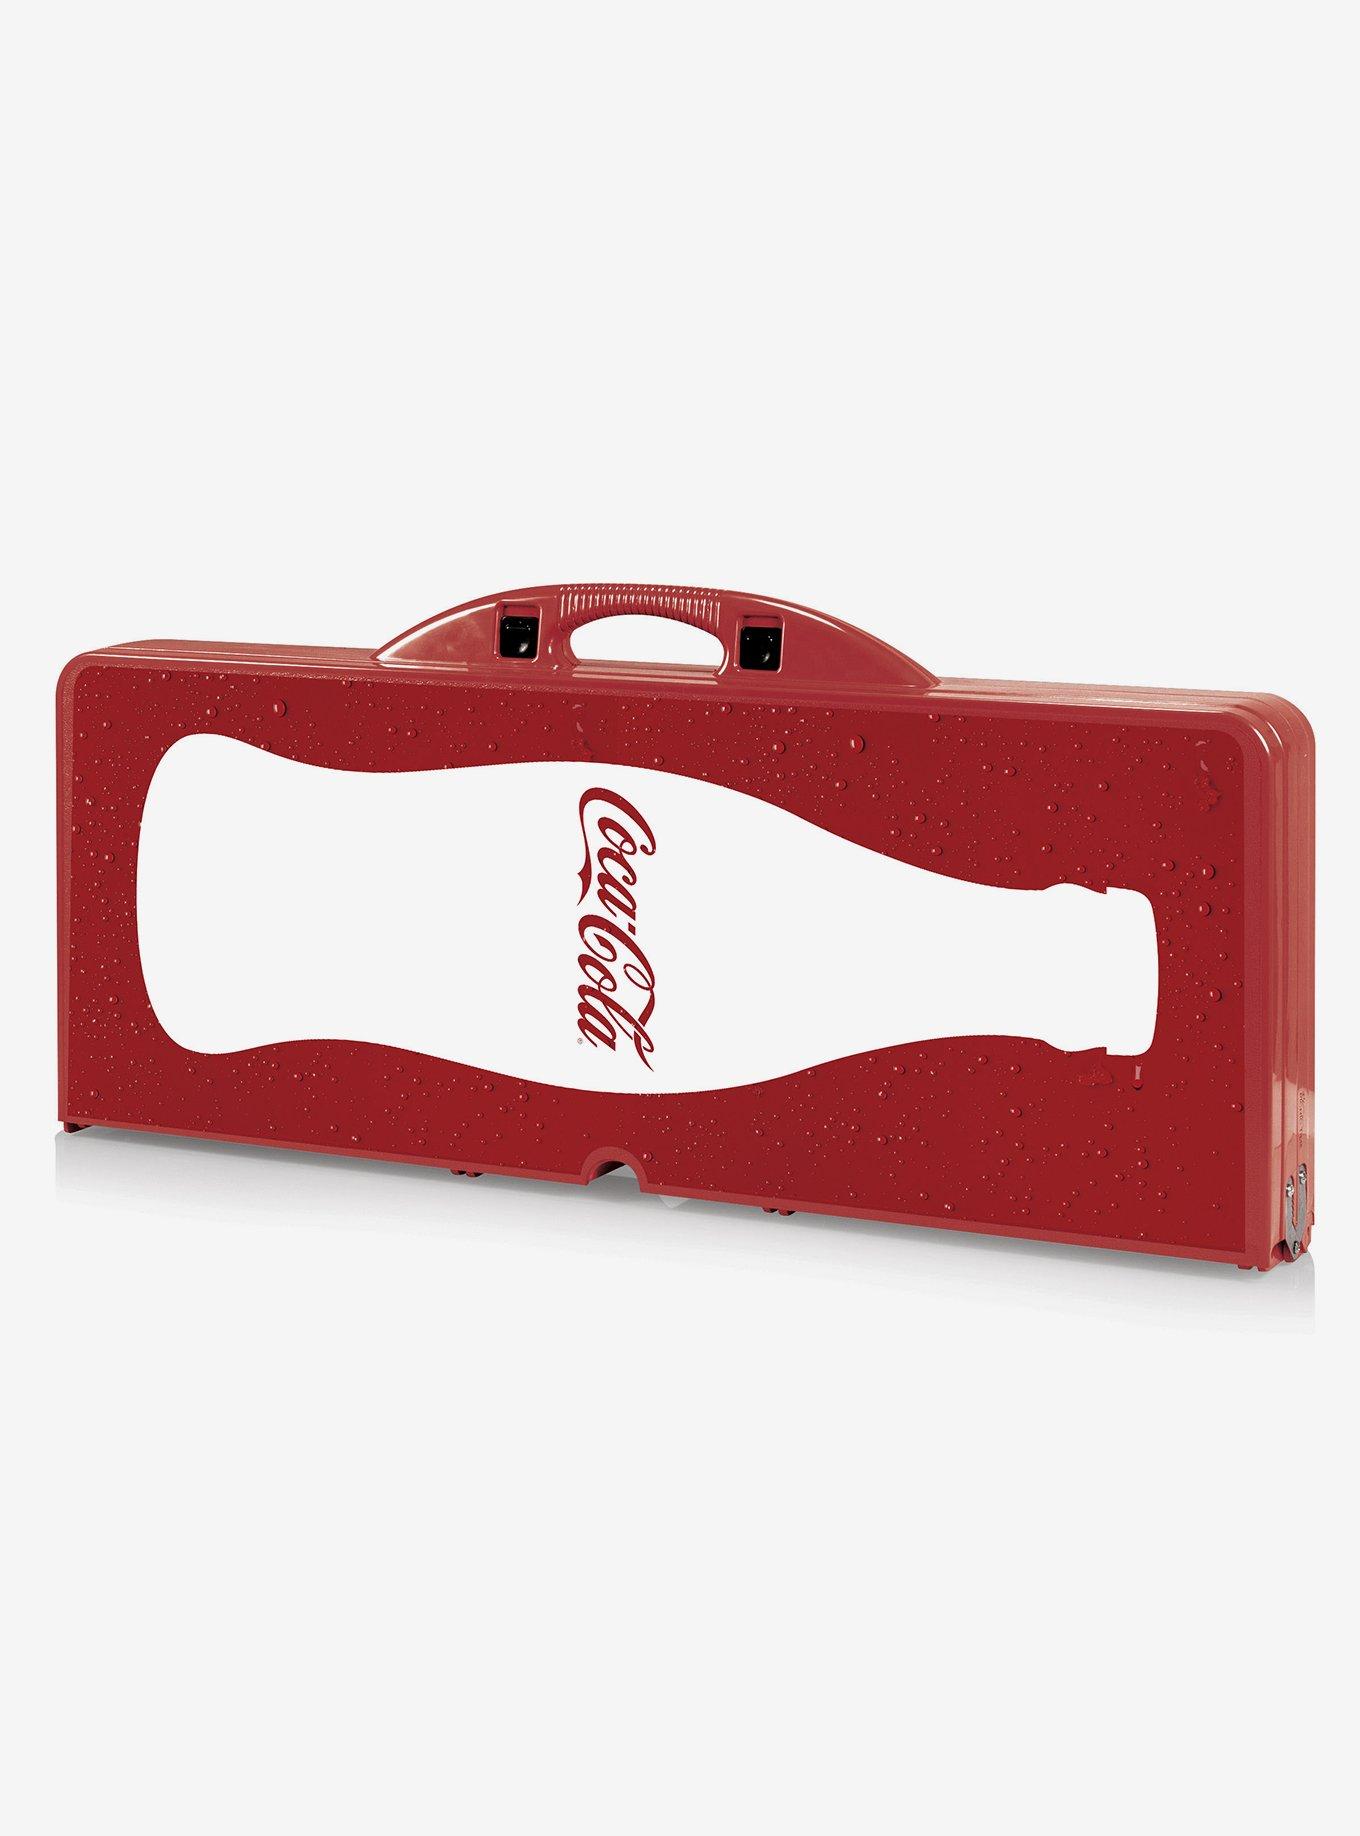 Coke Coca-Cola Bottle Picnic Table